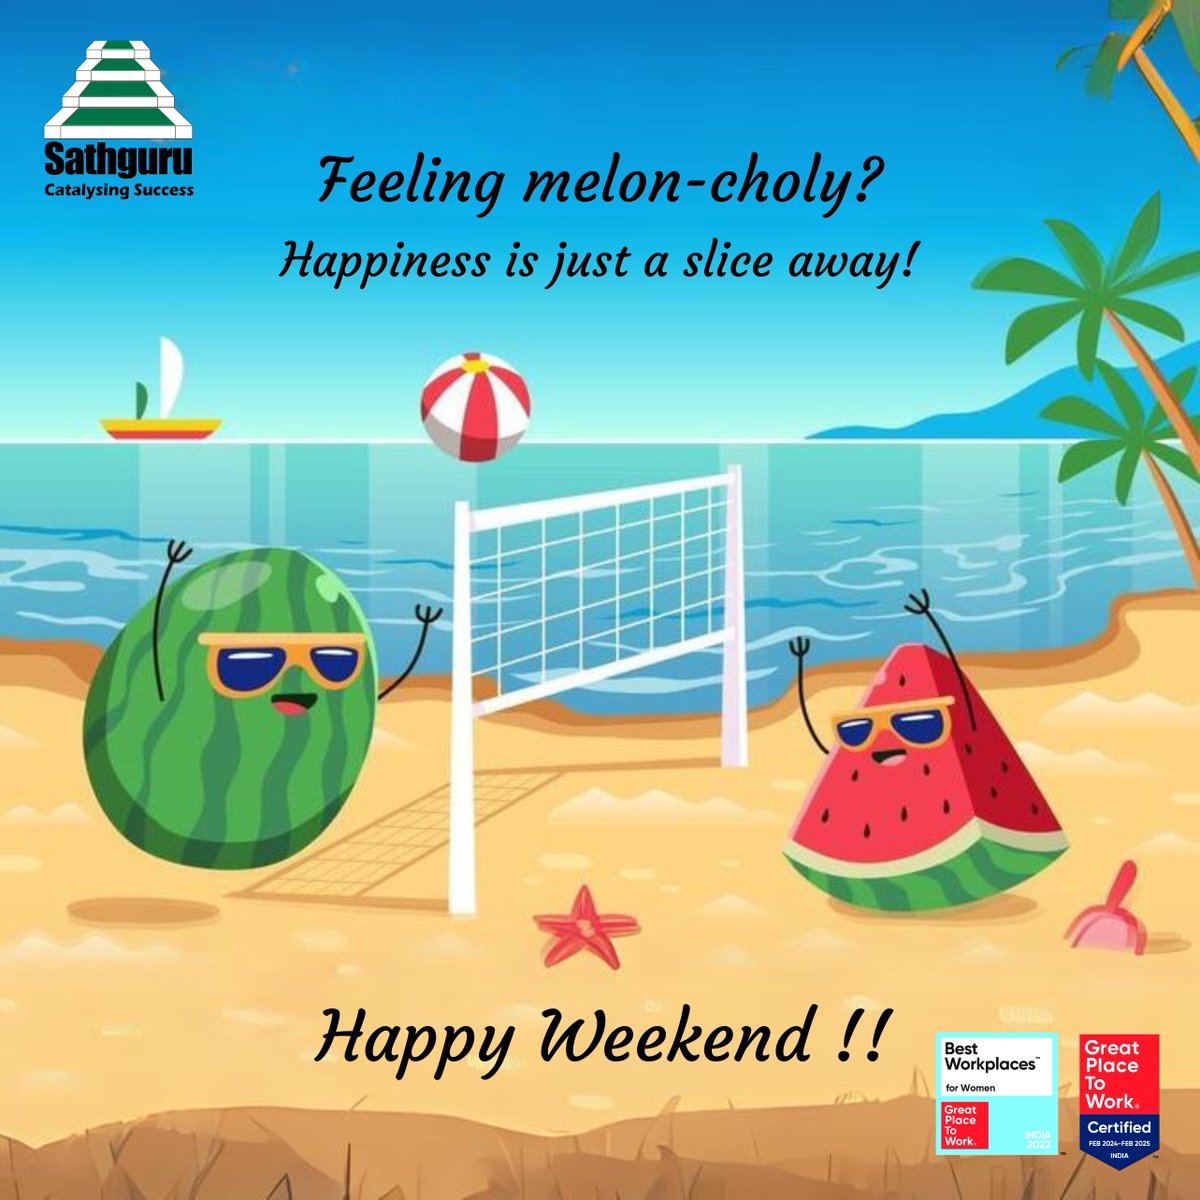 Feeling melon-choly? Happiness is just a slice away!

Happy Weekend fellas !!

#weekend #friday #reset #sathgurumc #gptw #smc